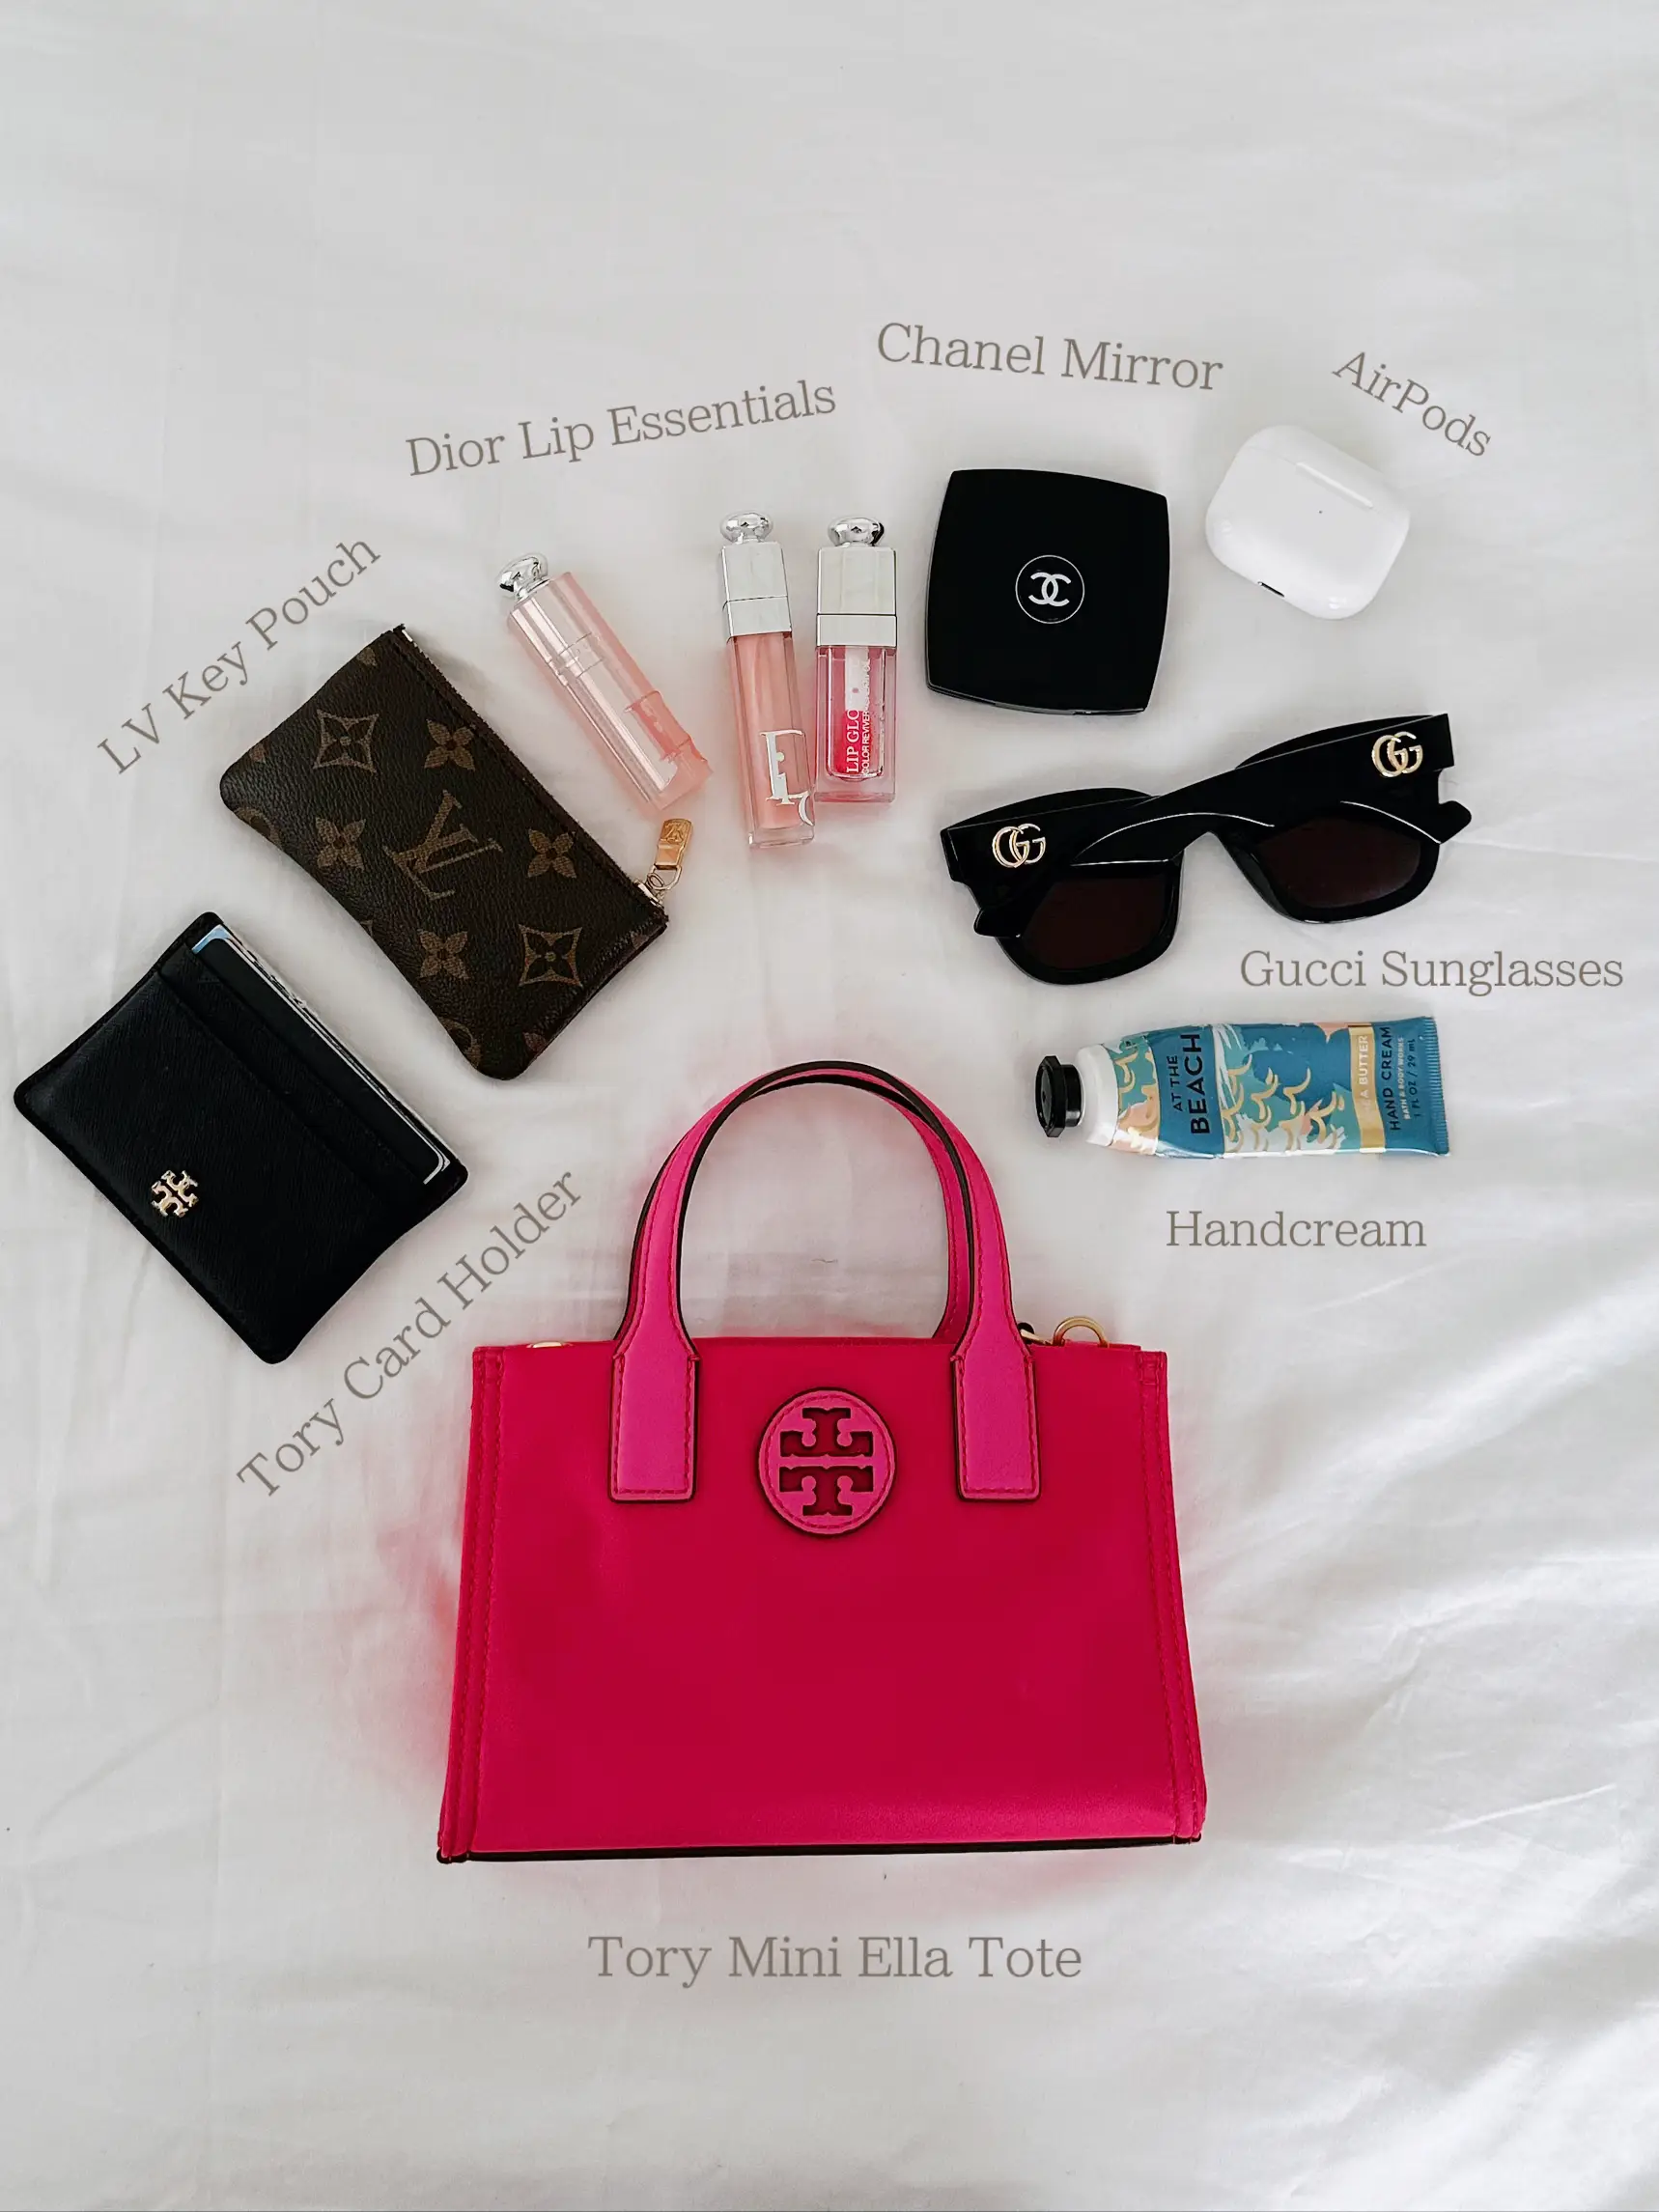 Whats in your tote bag? 👜 #whatsinmybag #whatsinmytotebag